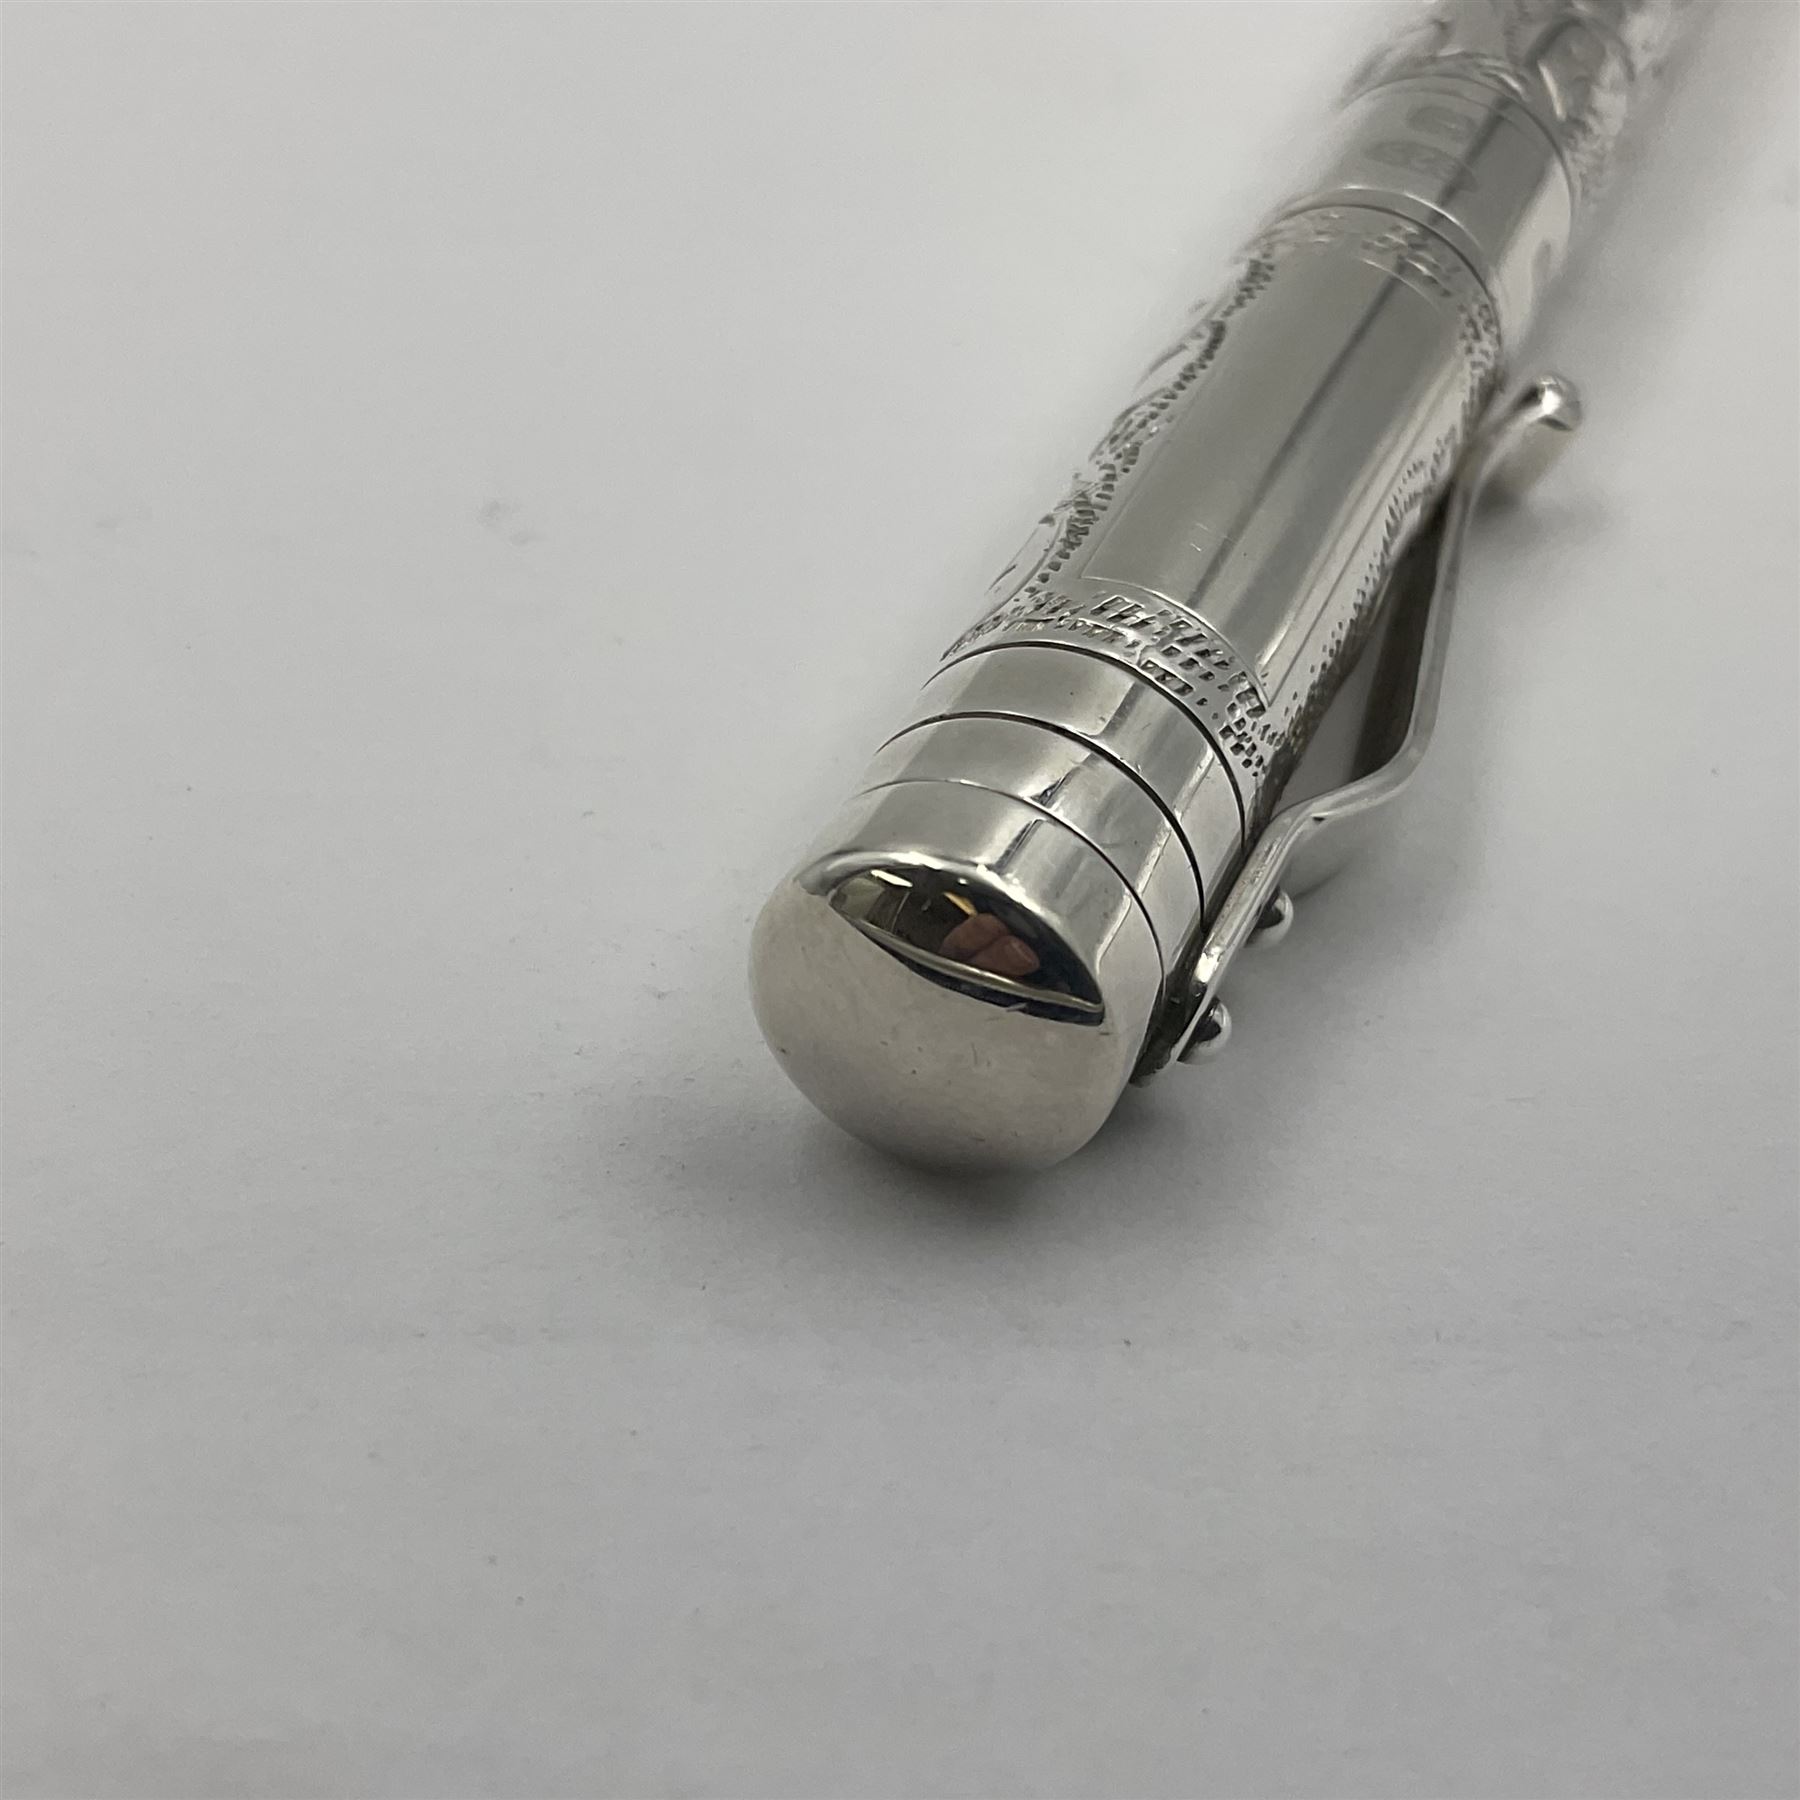 Silver Yard-o-Led Viceroy ballpoint pen - Image 14 of 16